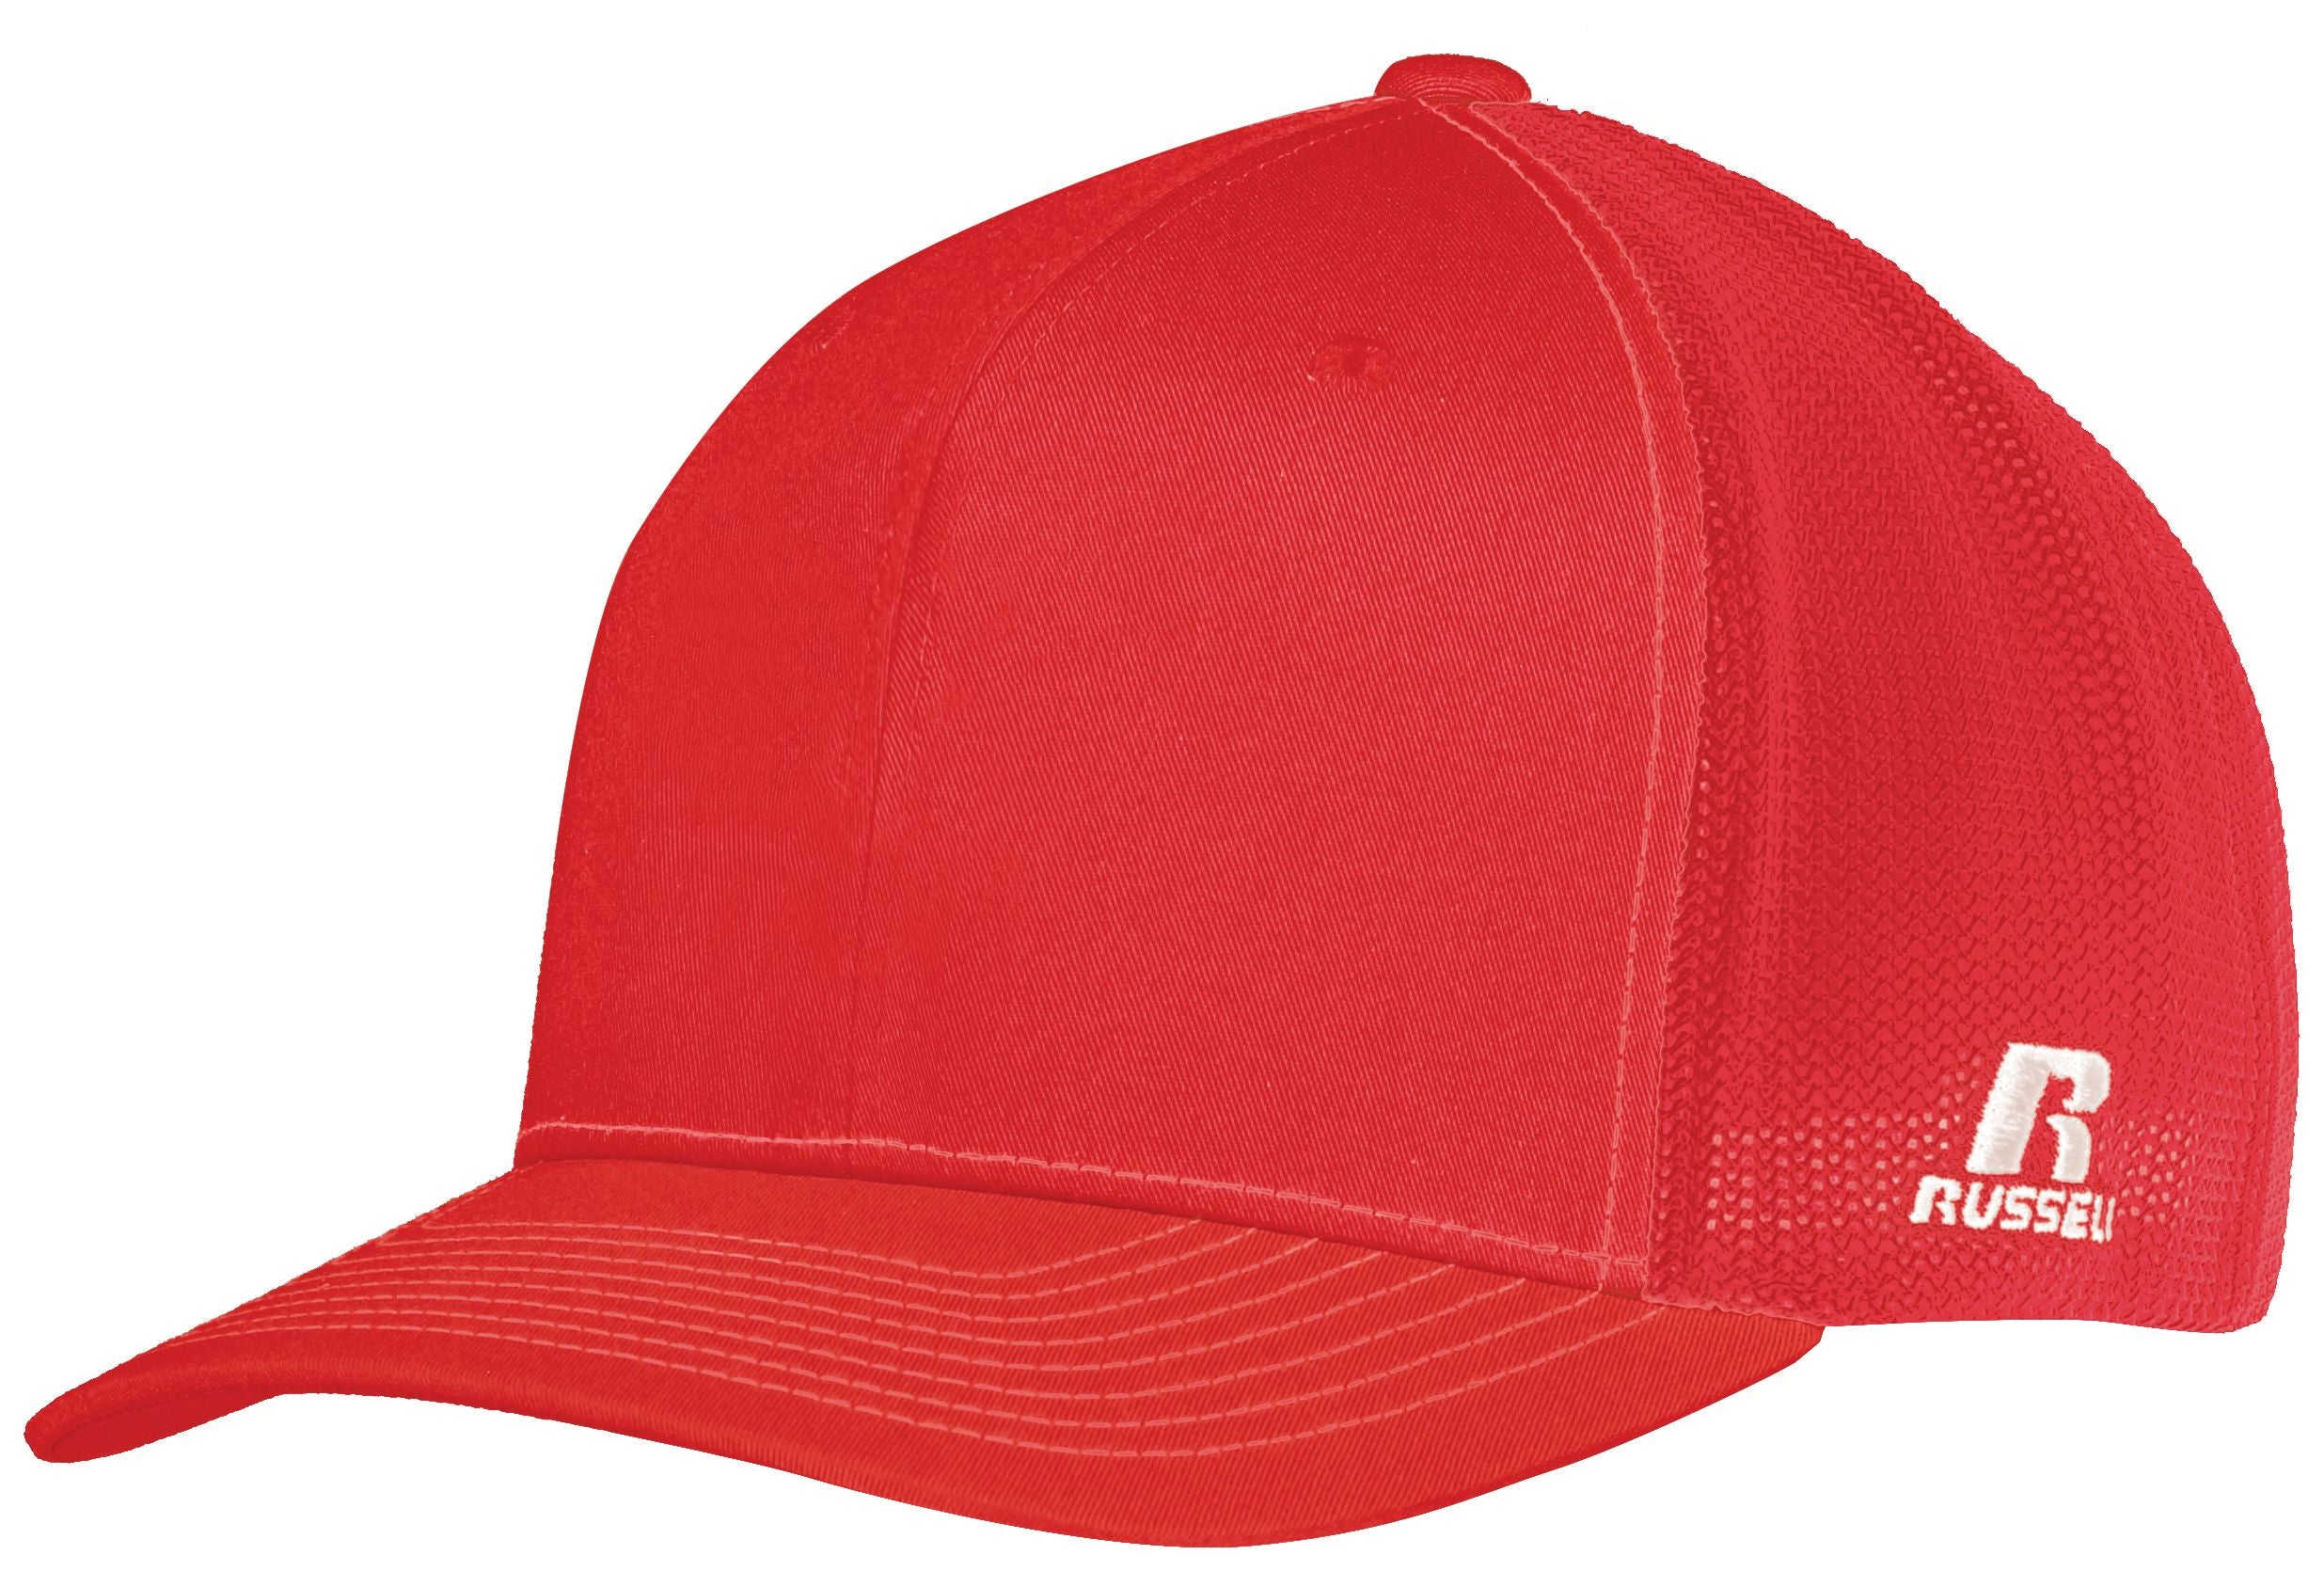 Russell Athletic Flexfit Twill Mesh Cap in True Red  -Part of the Adult, Headwear, Headwear-Cap, Russell-Athletic-Products product lines at KanaleyCreations.com